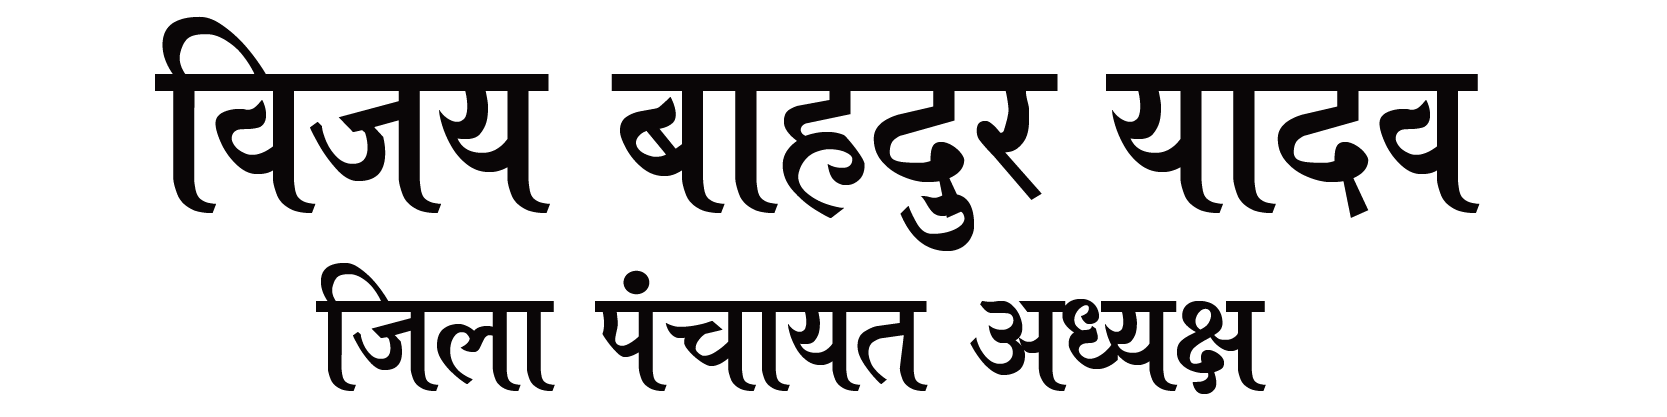 Company Logo For Lucknow Zila panchayat adhyaksh - Vijay Bah'